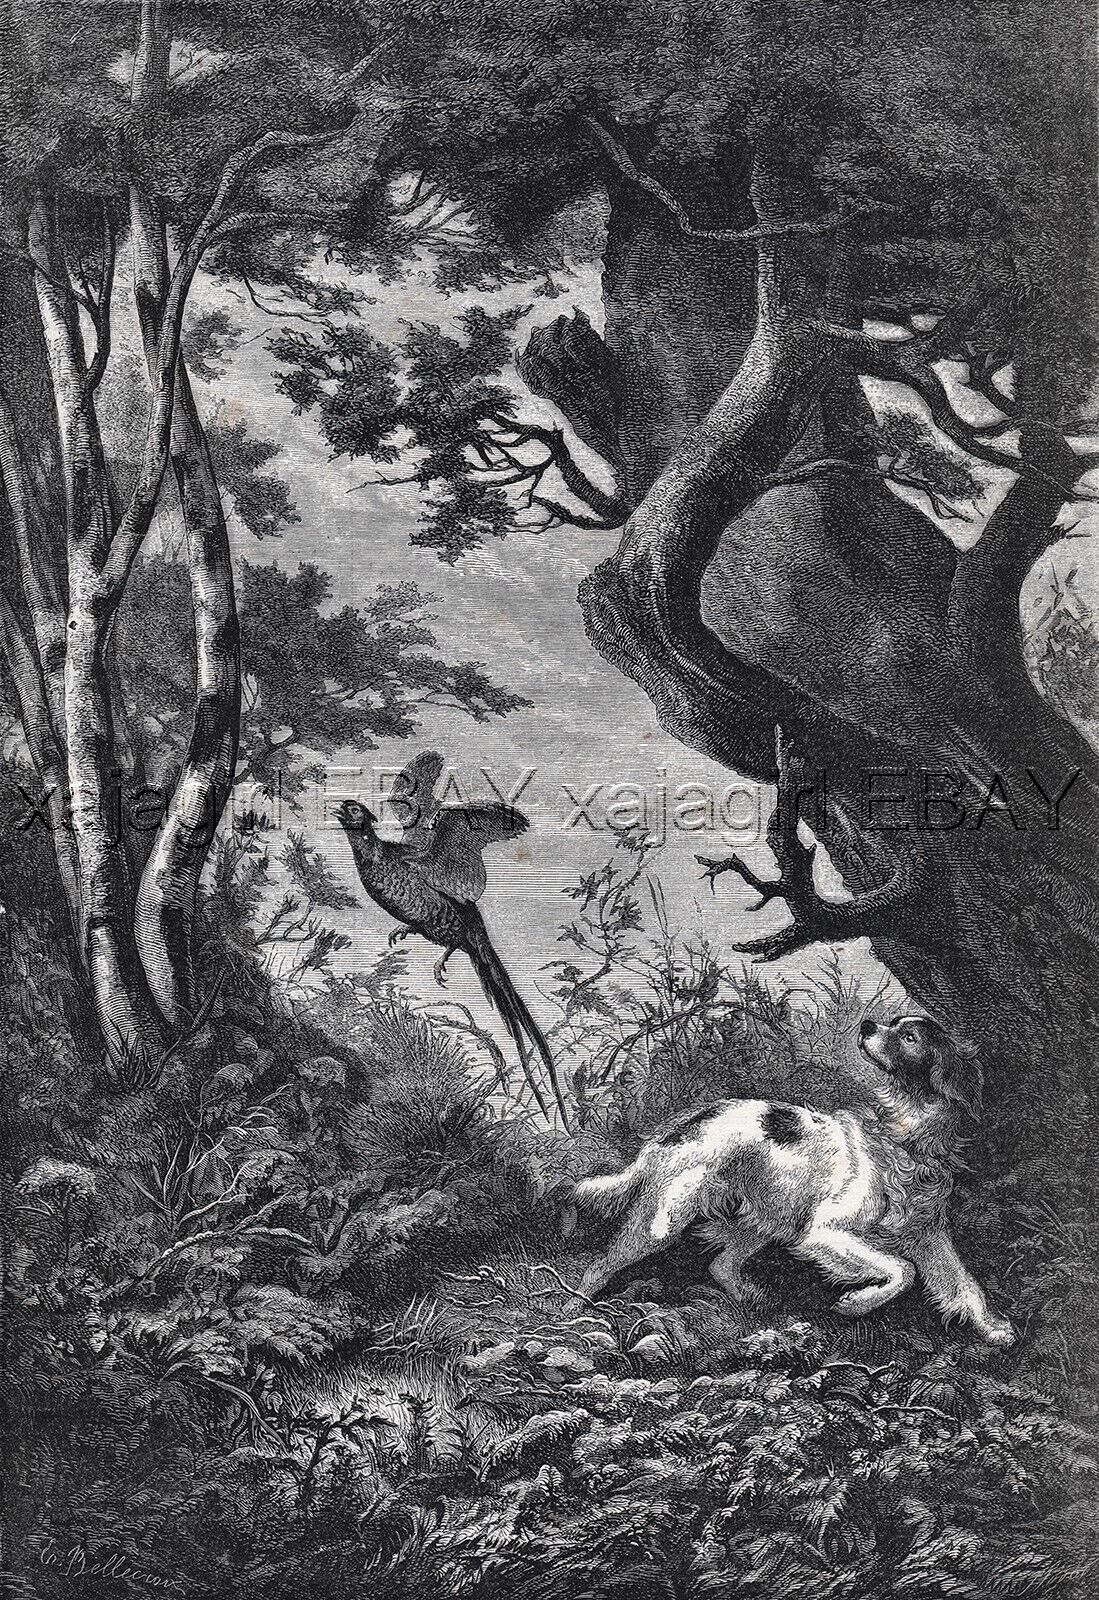 Dog French Spaniel Hunting Pheasant, Large 1860s Antique Engraving Print